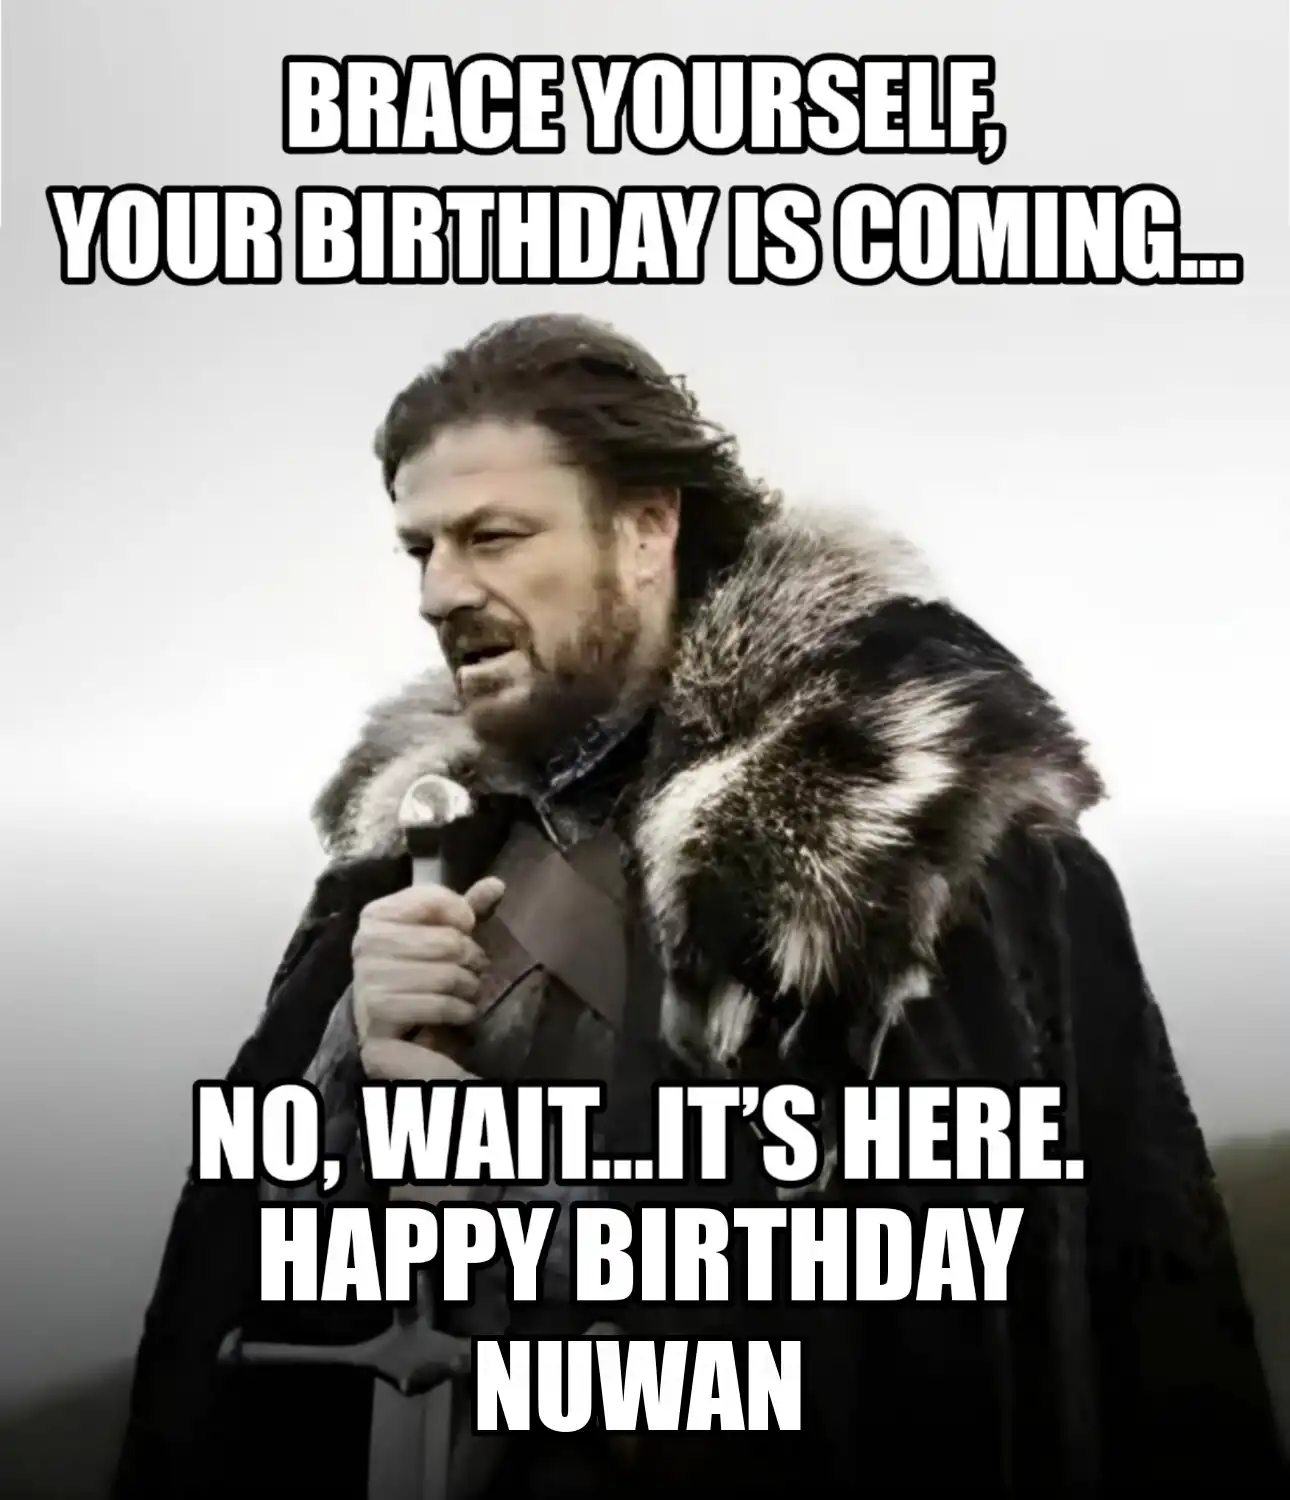 Happy Birthday Nuwan Brace Yourself Your Birthday Is Coming Meme